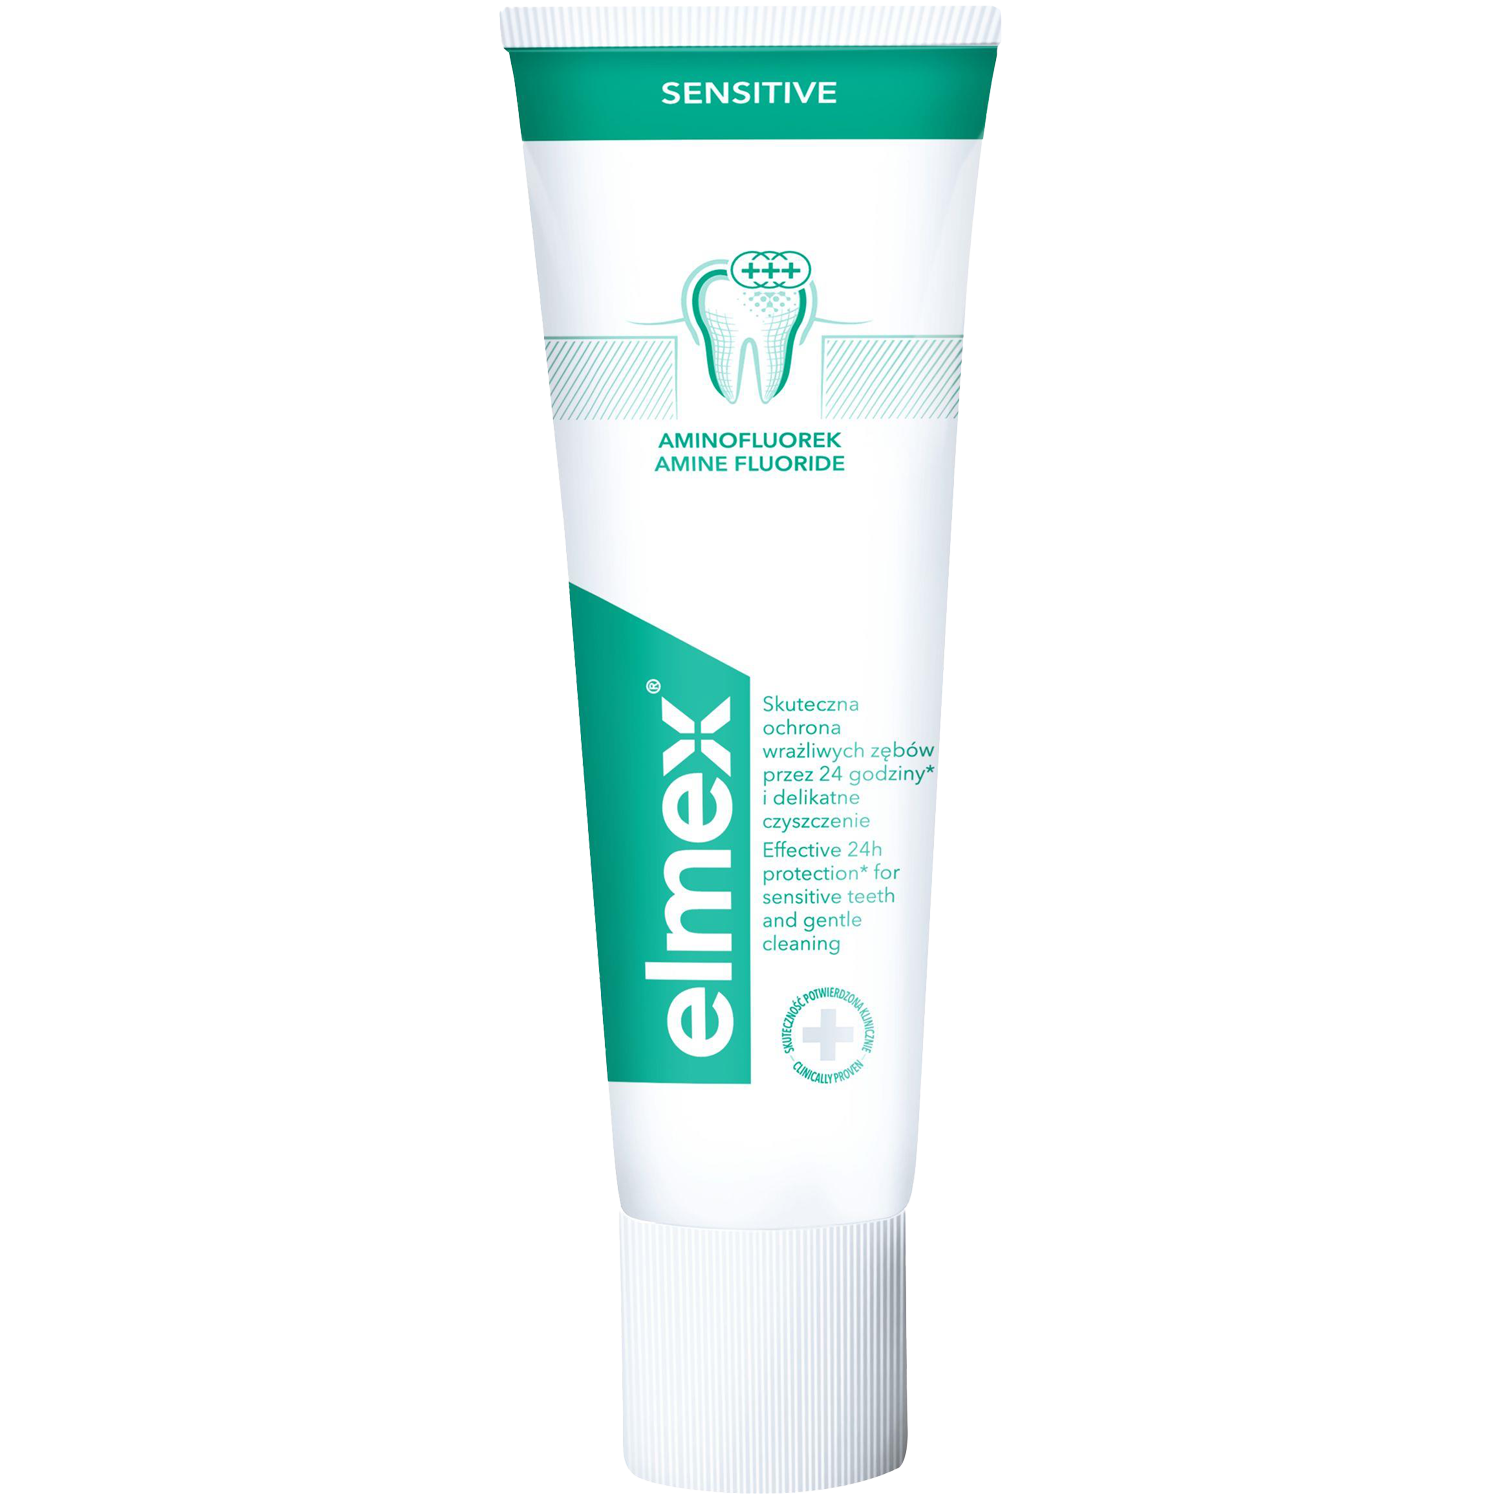 Elmex Sensitive зубная паста, 75 мл elmex зубная паста 75 мл